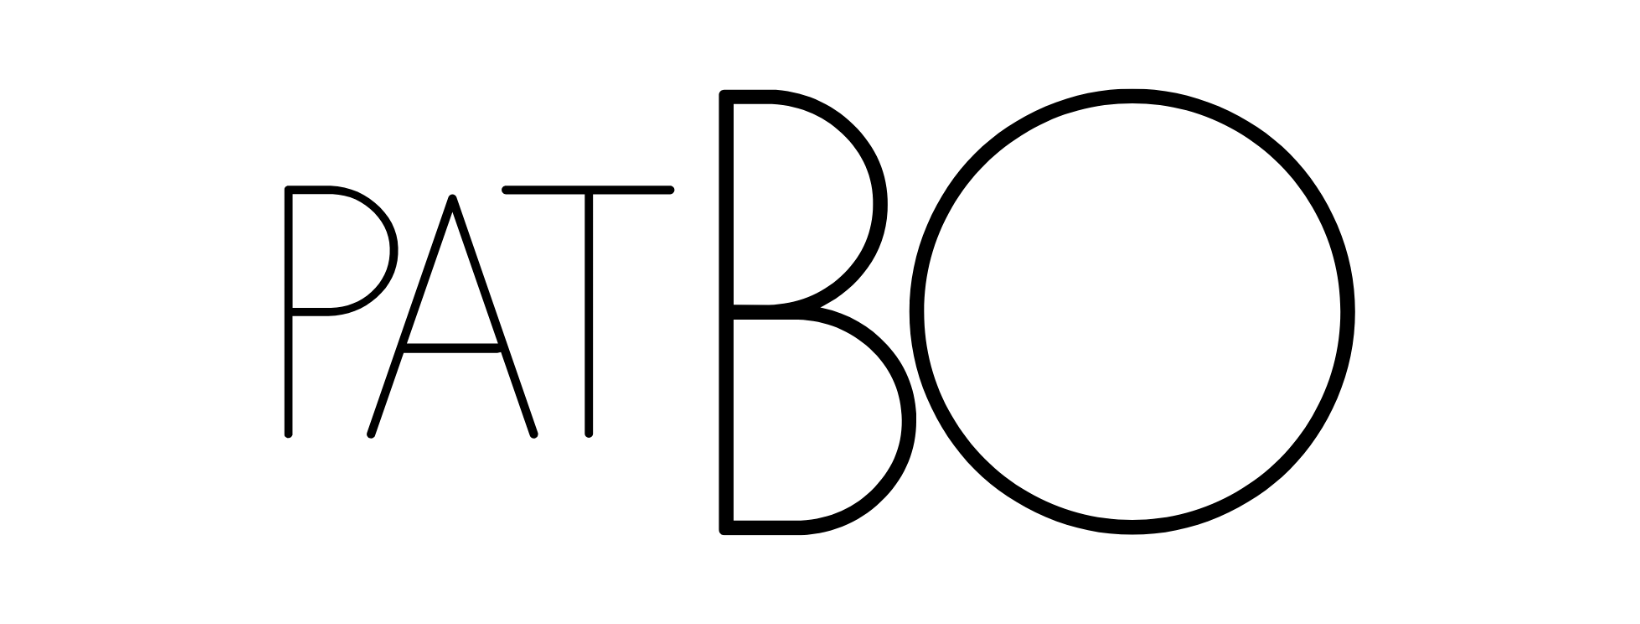 PatBO logo